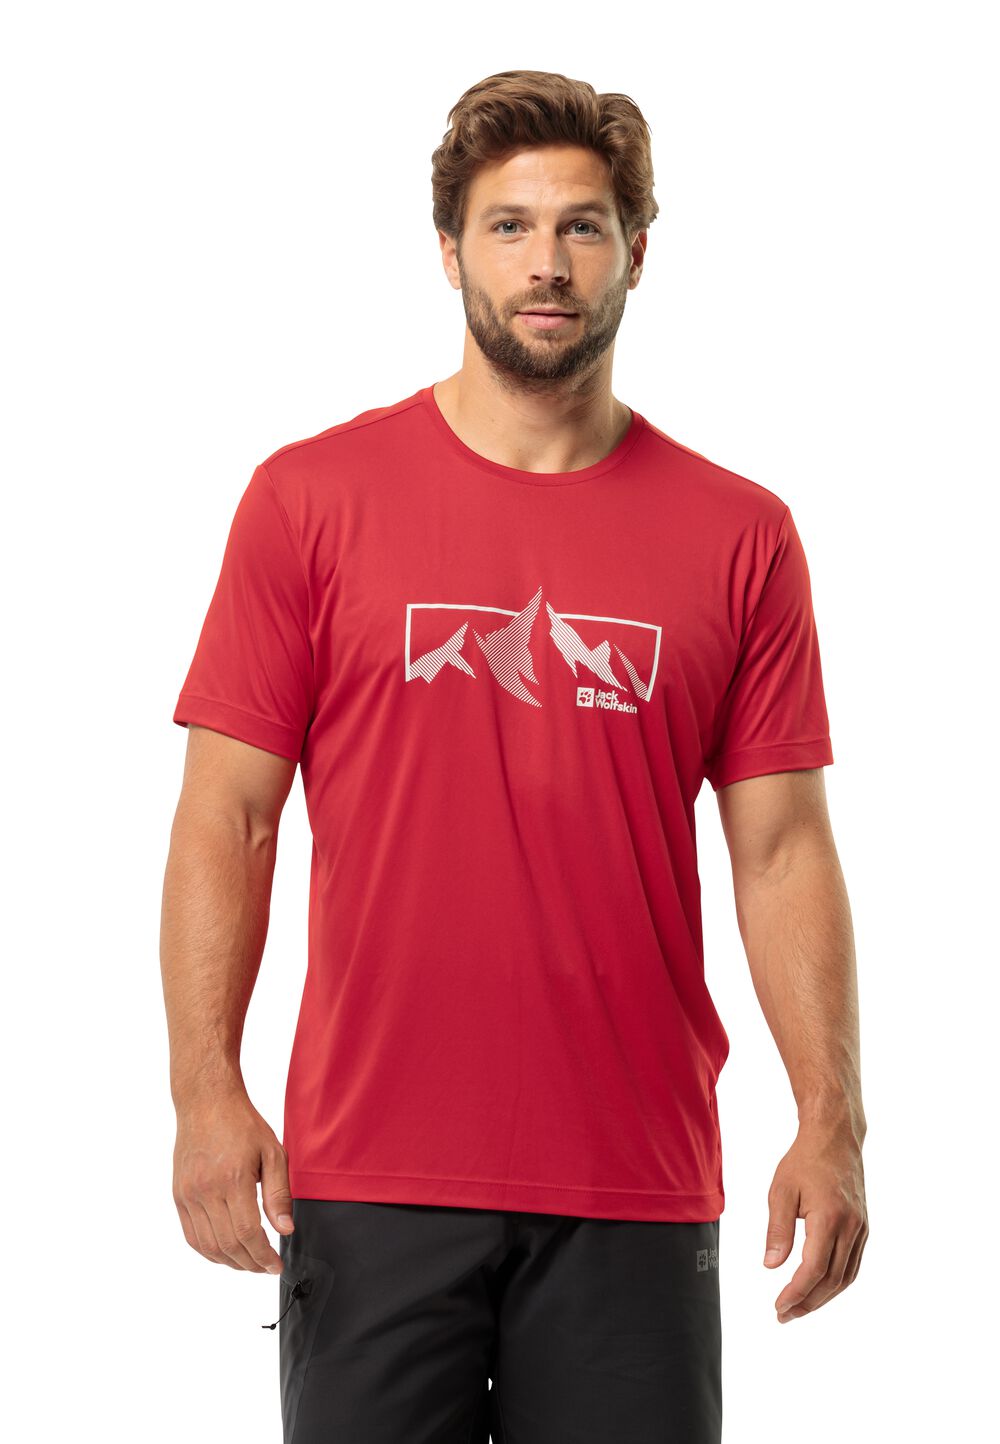 Jack Wolfskin Peak Graphic T-Shirt Men Functioneel shirt Heren 3XL rood red glow